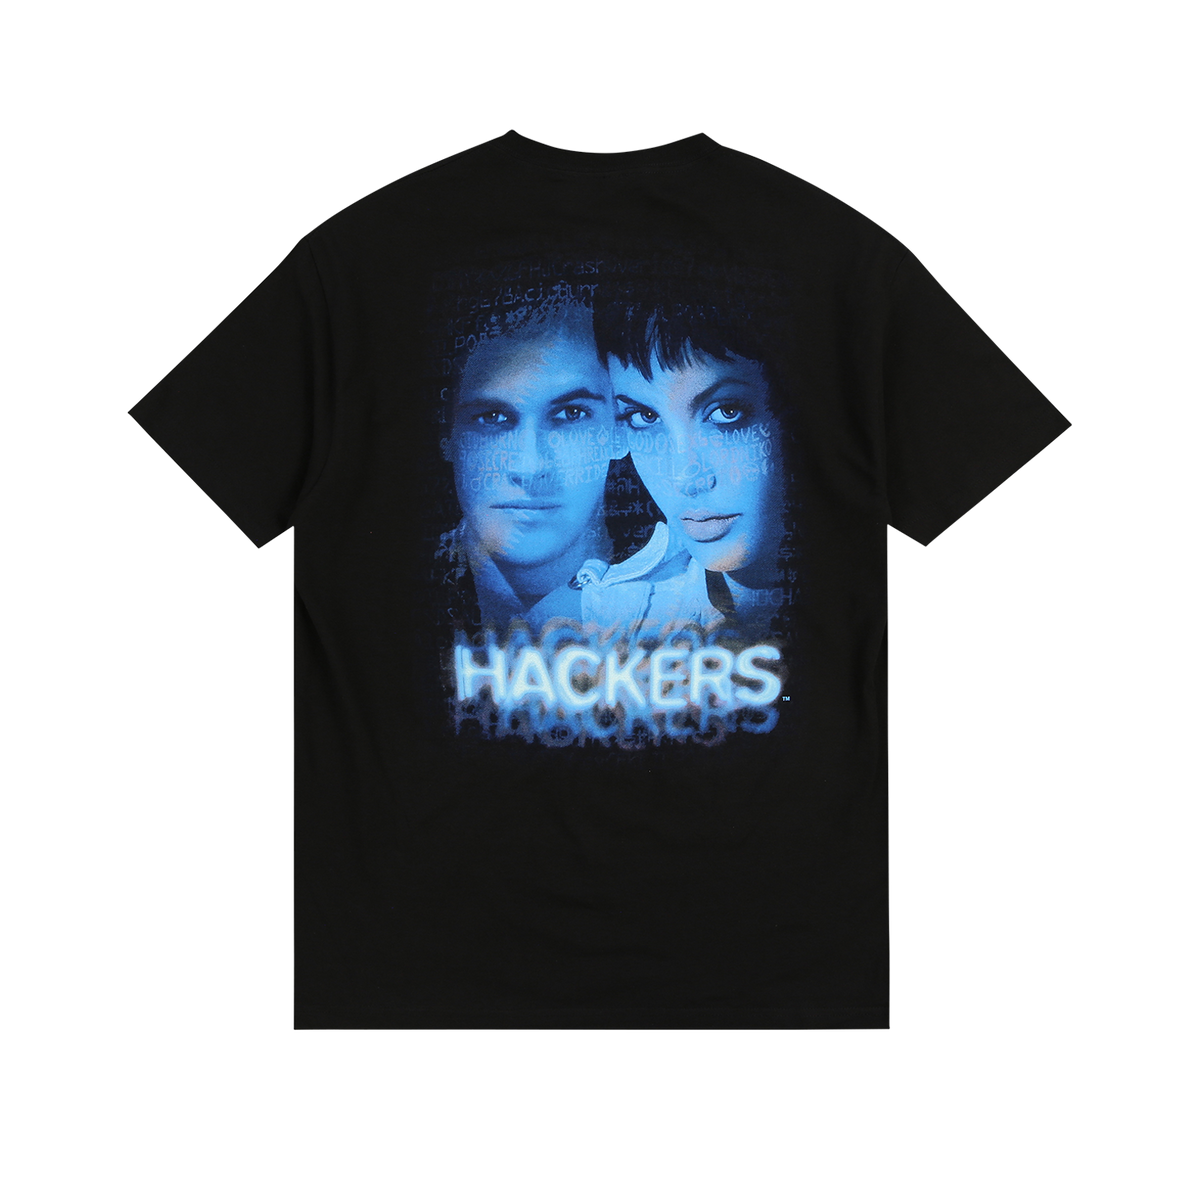 Hackers T-Shirt - Black